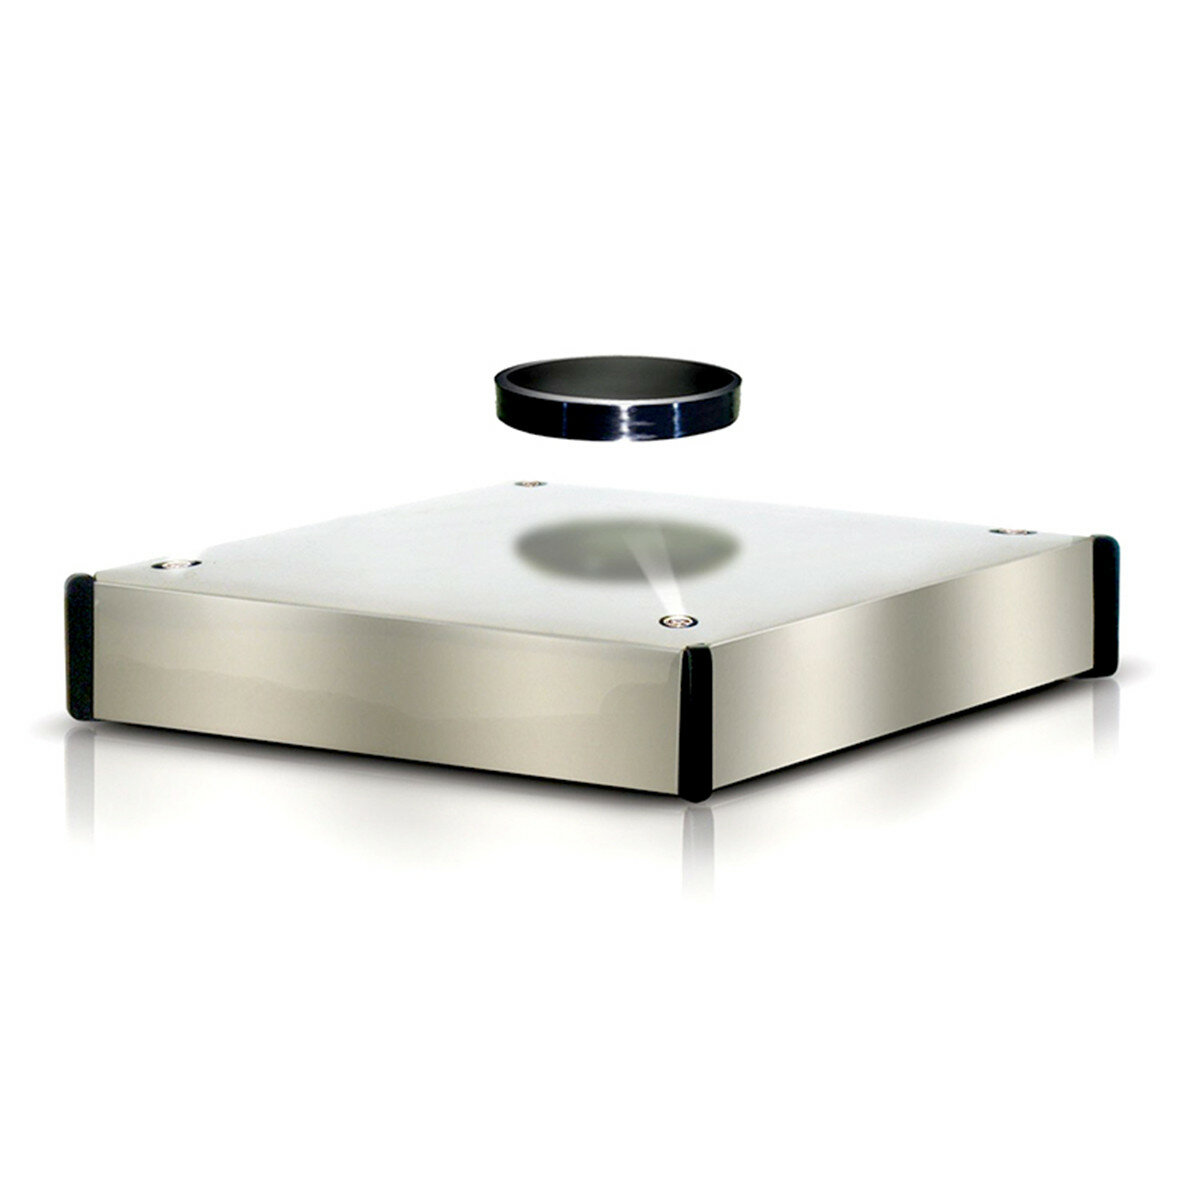 Details about   Magnetic Levitation Floating Ion Revolution Display Platform Tray With Ez Float 